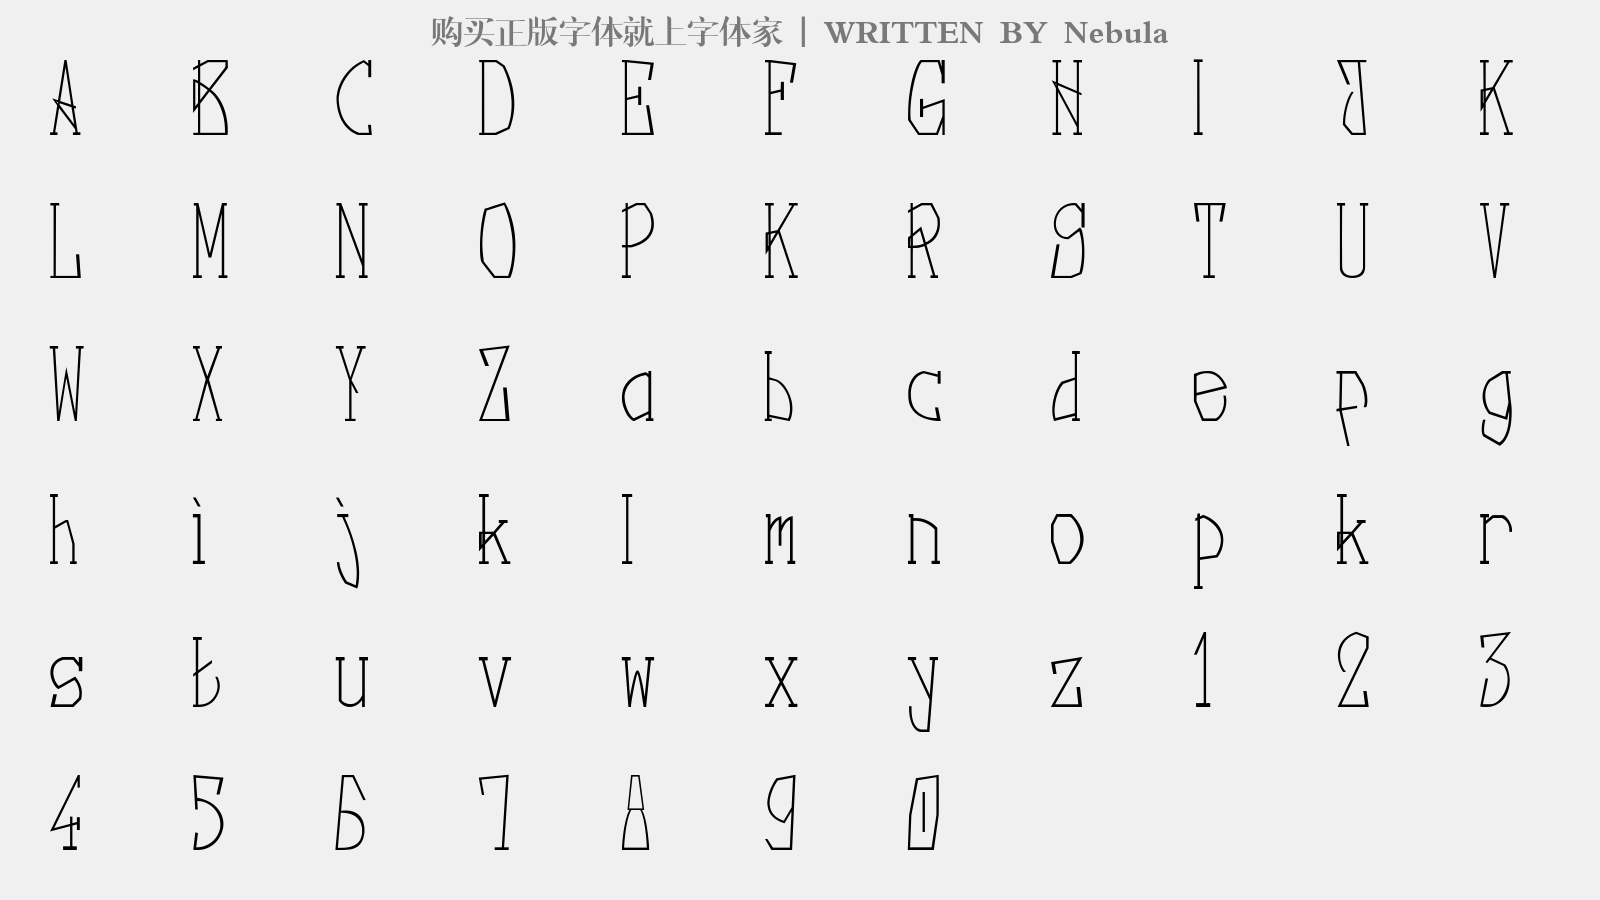 Nebula - 大写字母/小写字母/数字